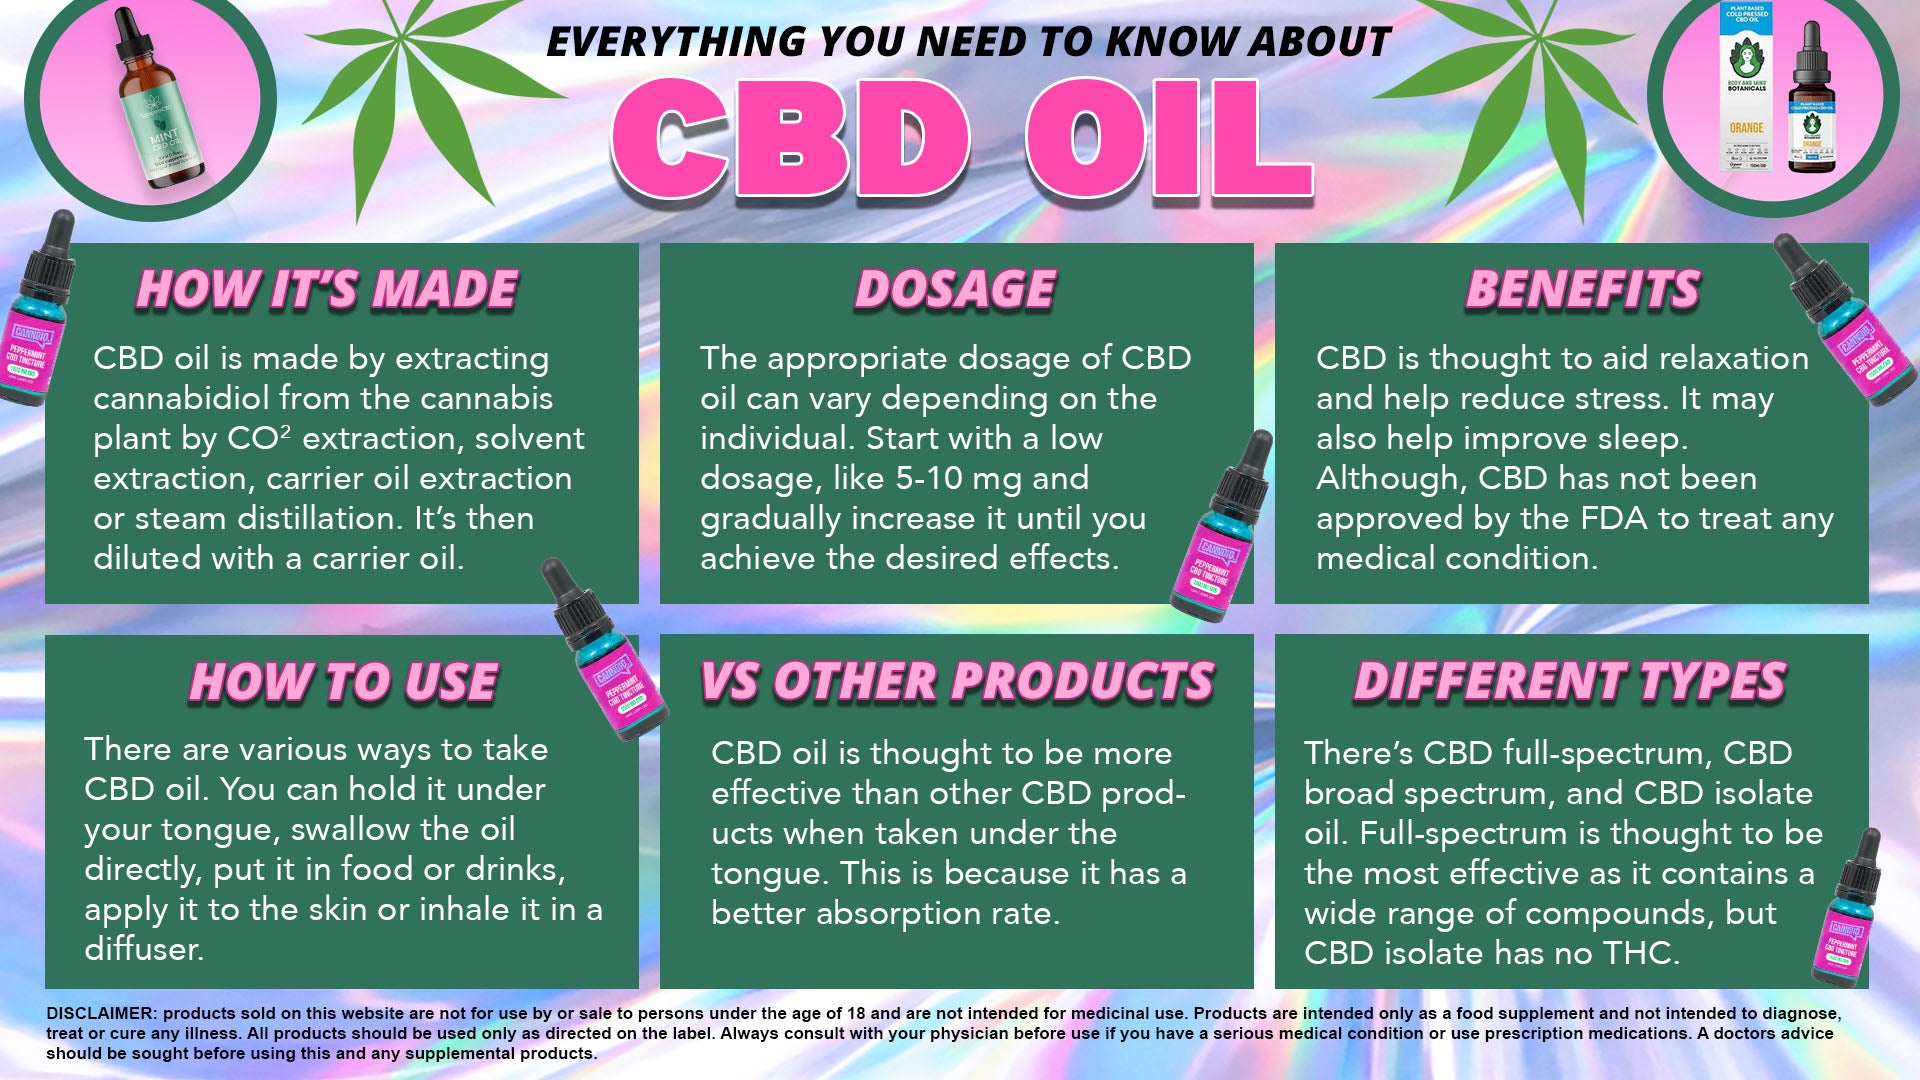 How Do You Use CBD Oil